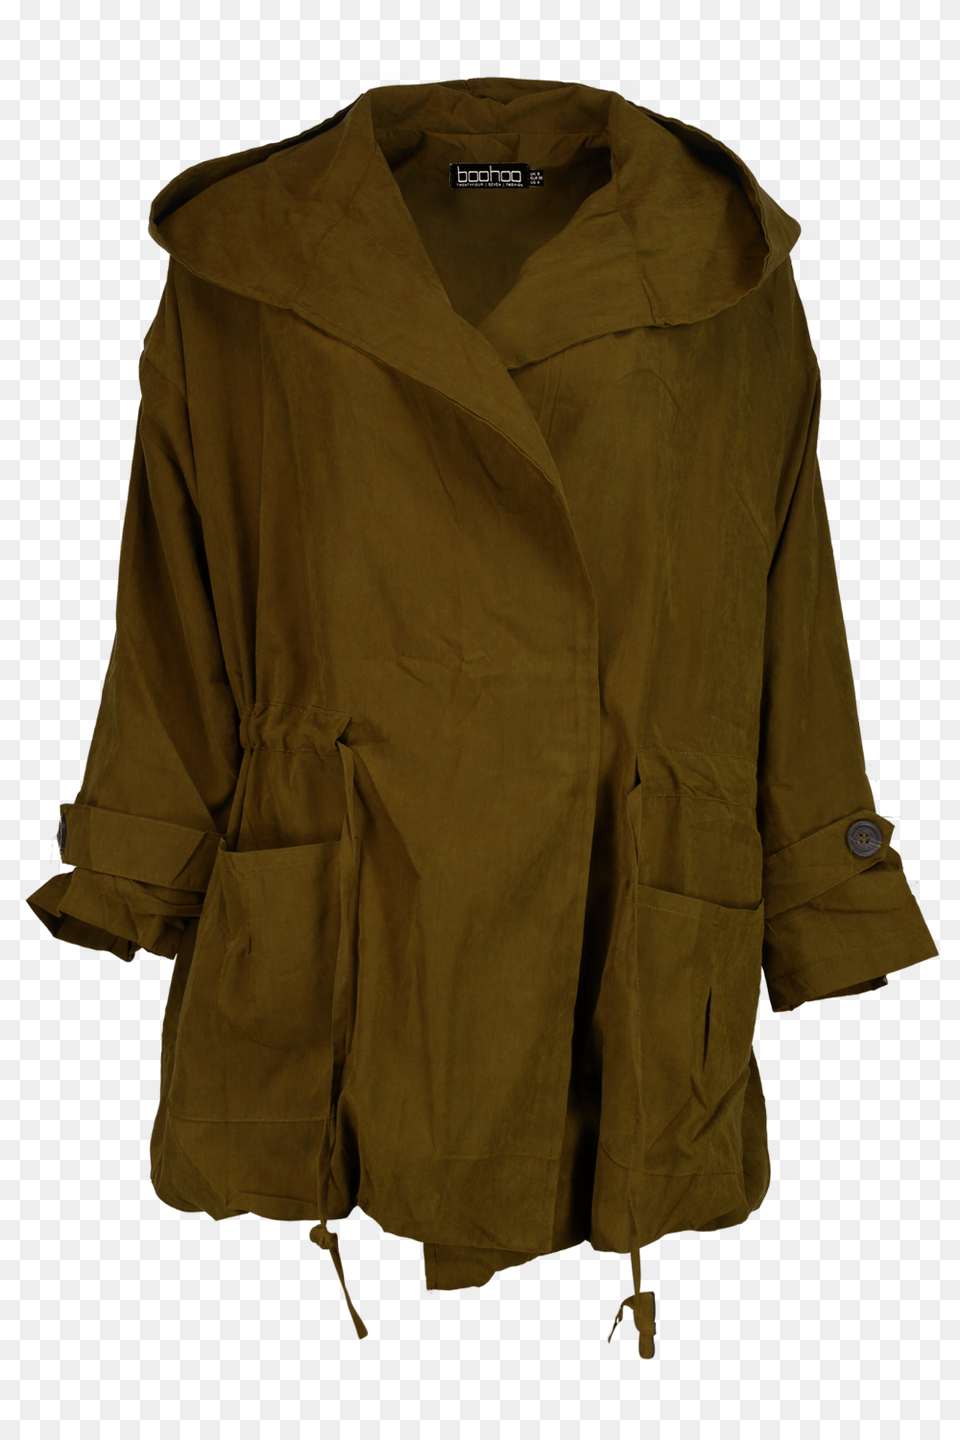 Sunday Girl Lily Collins, Clothing, Coat, Jacket, Overcoat Png Image